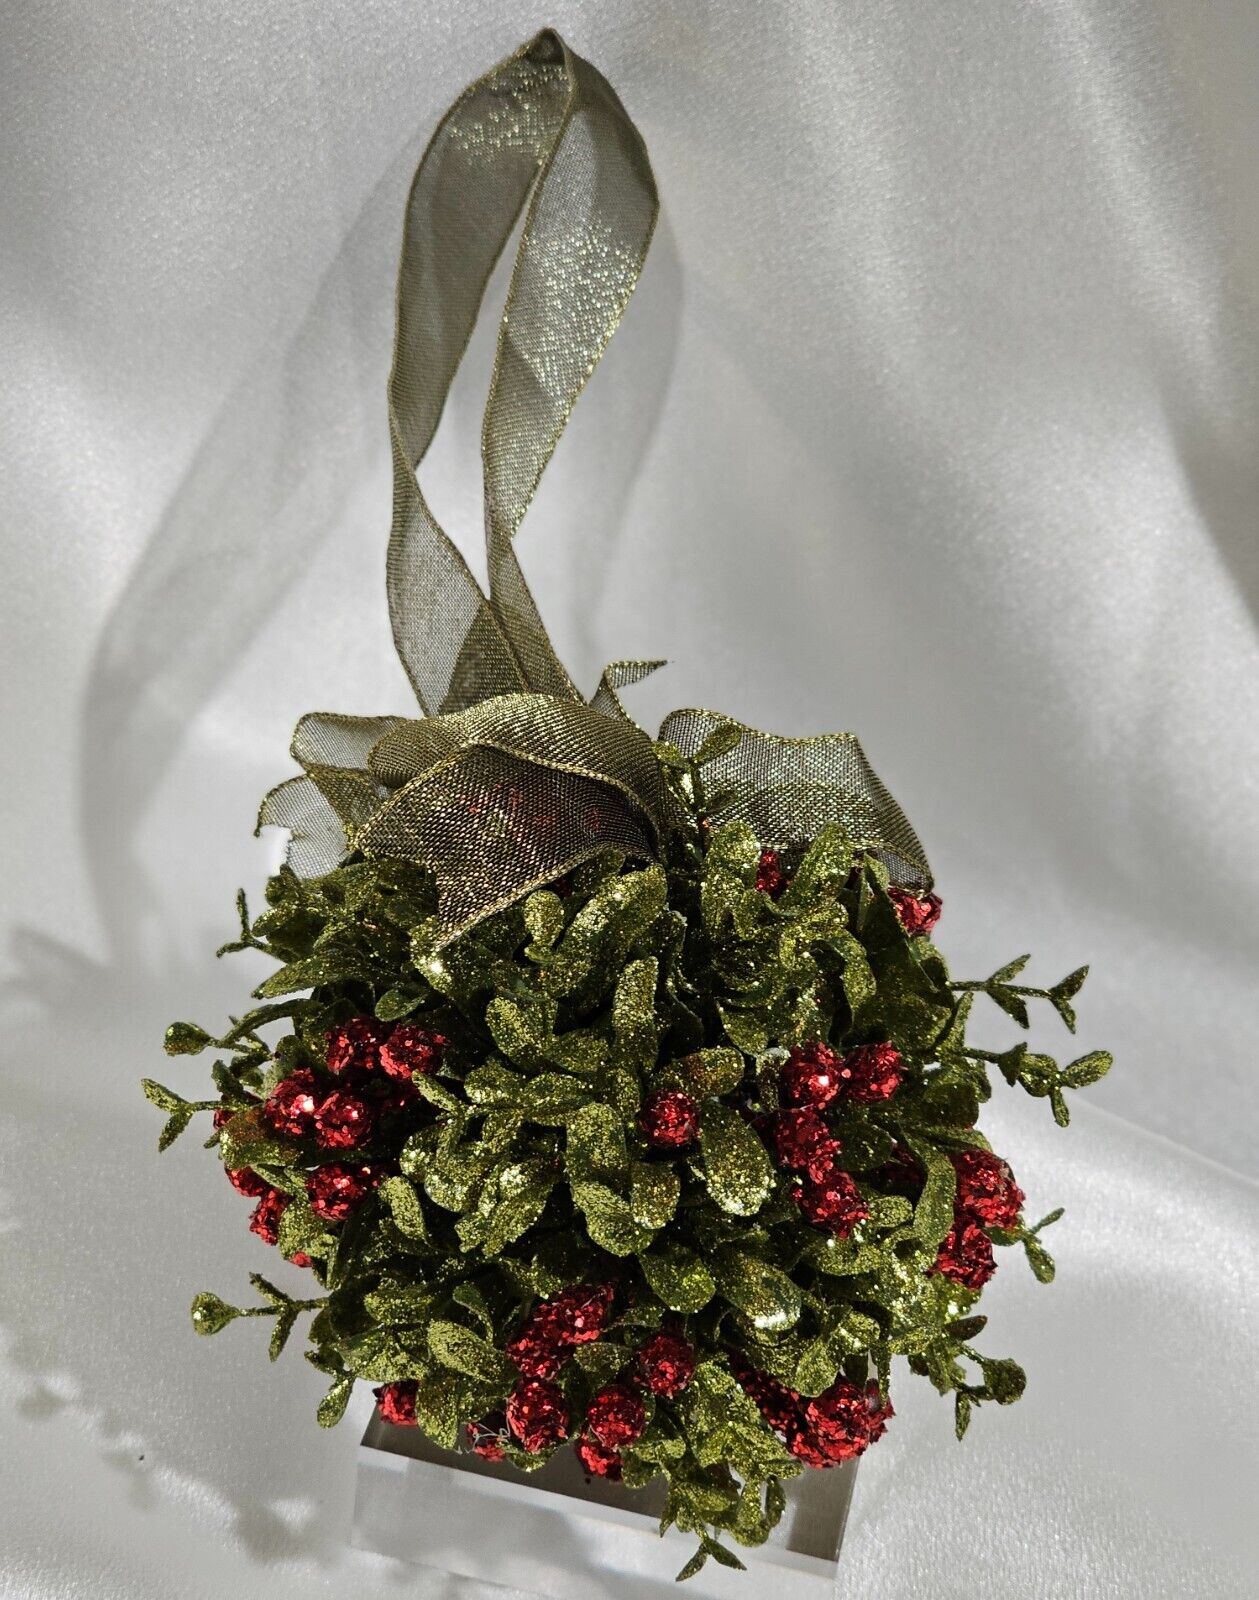 Kissing Crystals Kissing Ball Mistletoe Berries Ornament- Christmas Décor